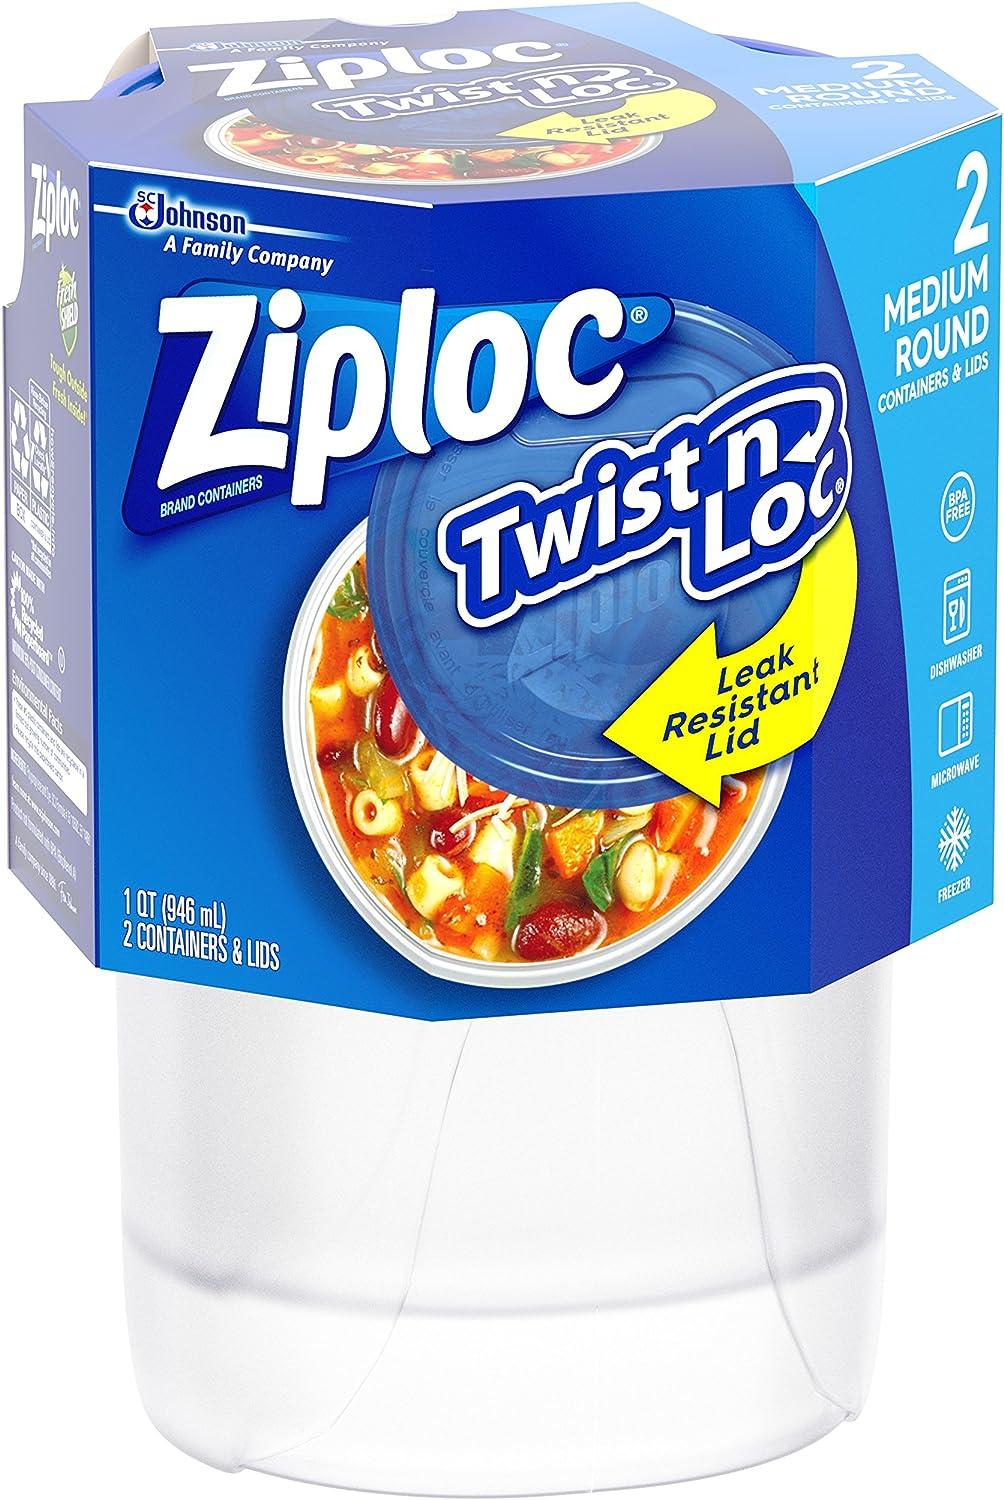 Ziploc Twist N Loc Food Storage Meal Prep Containers Review 